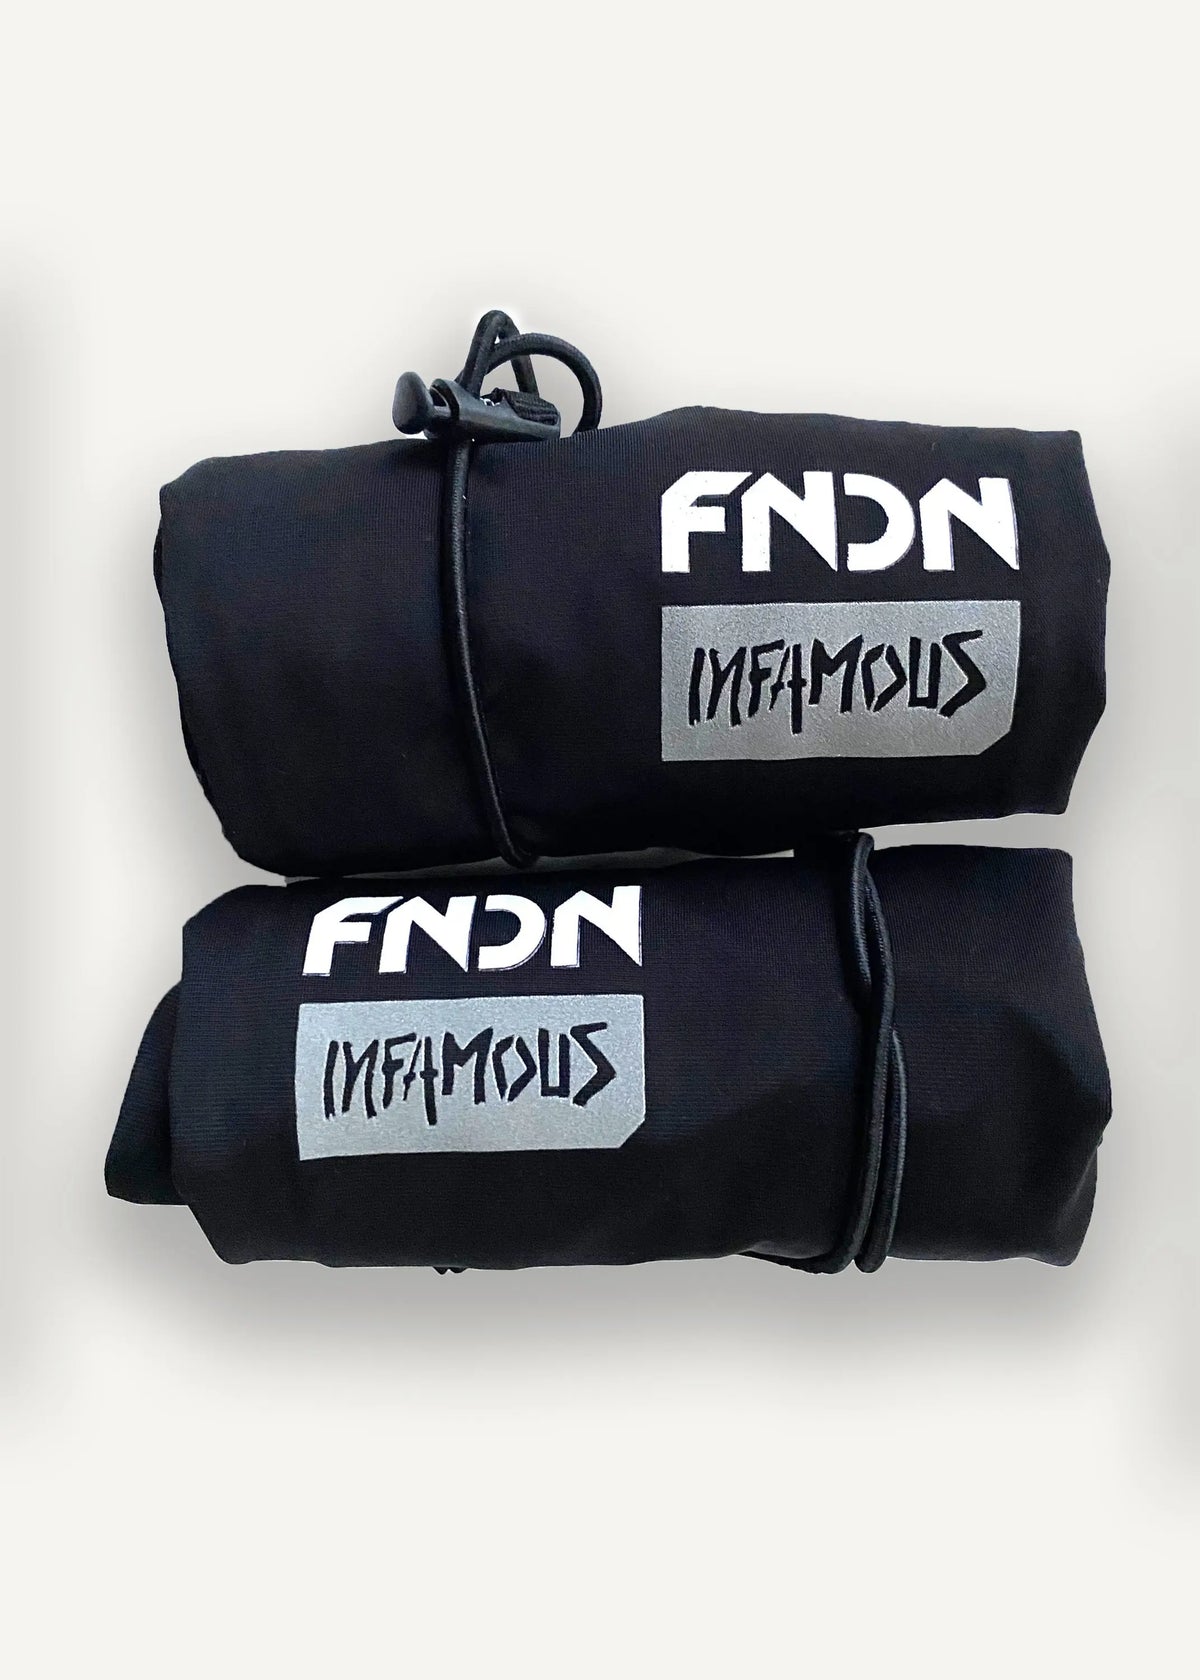 FNDN Infamous Waterproof Socks AKA “Portable Rain Boots” FNDN